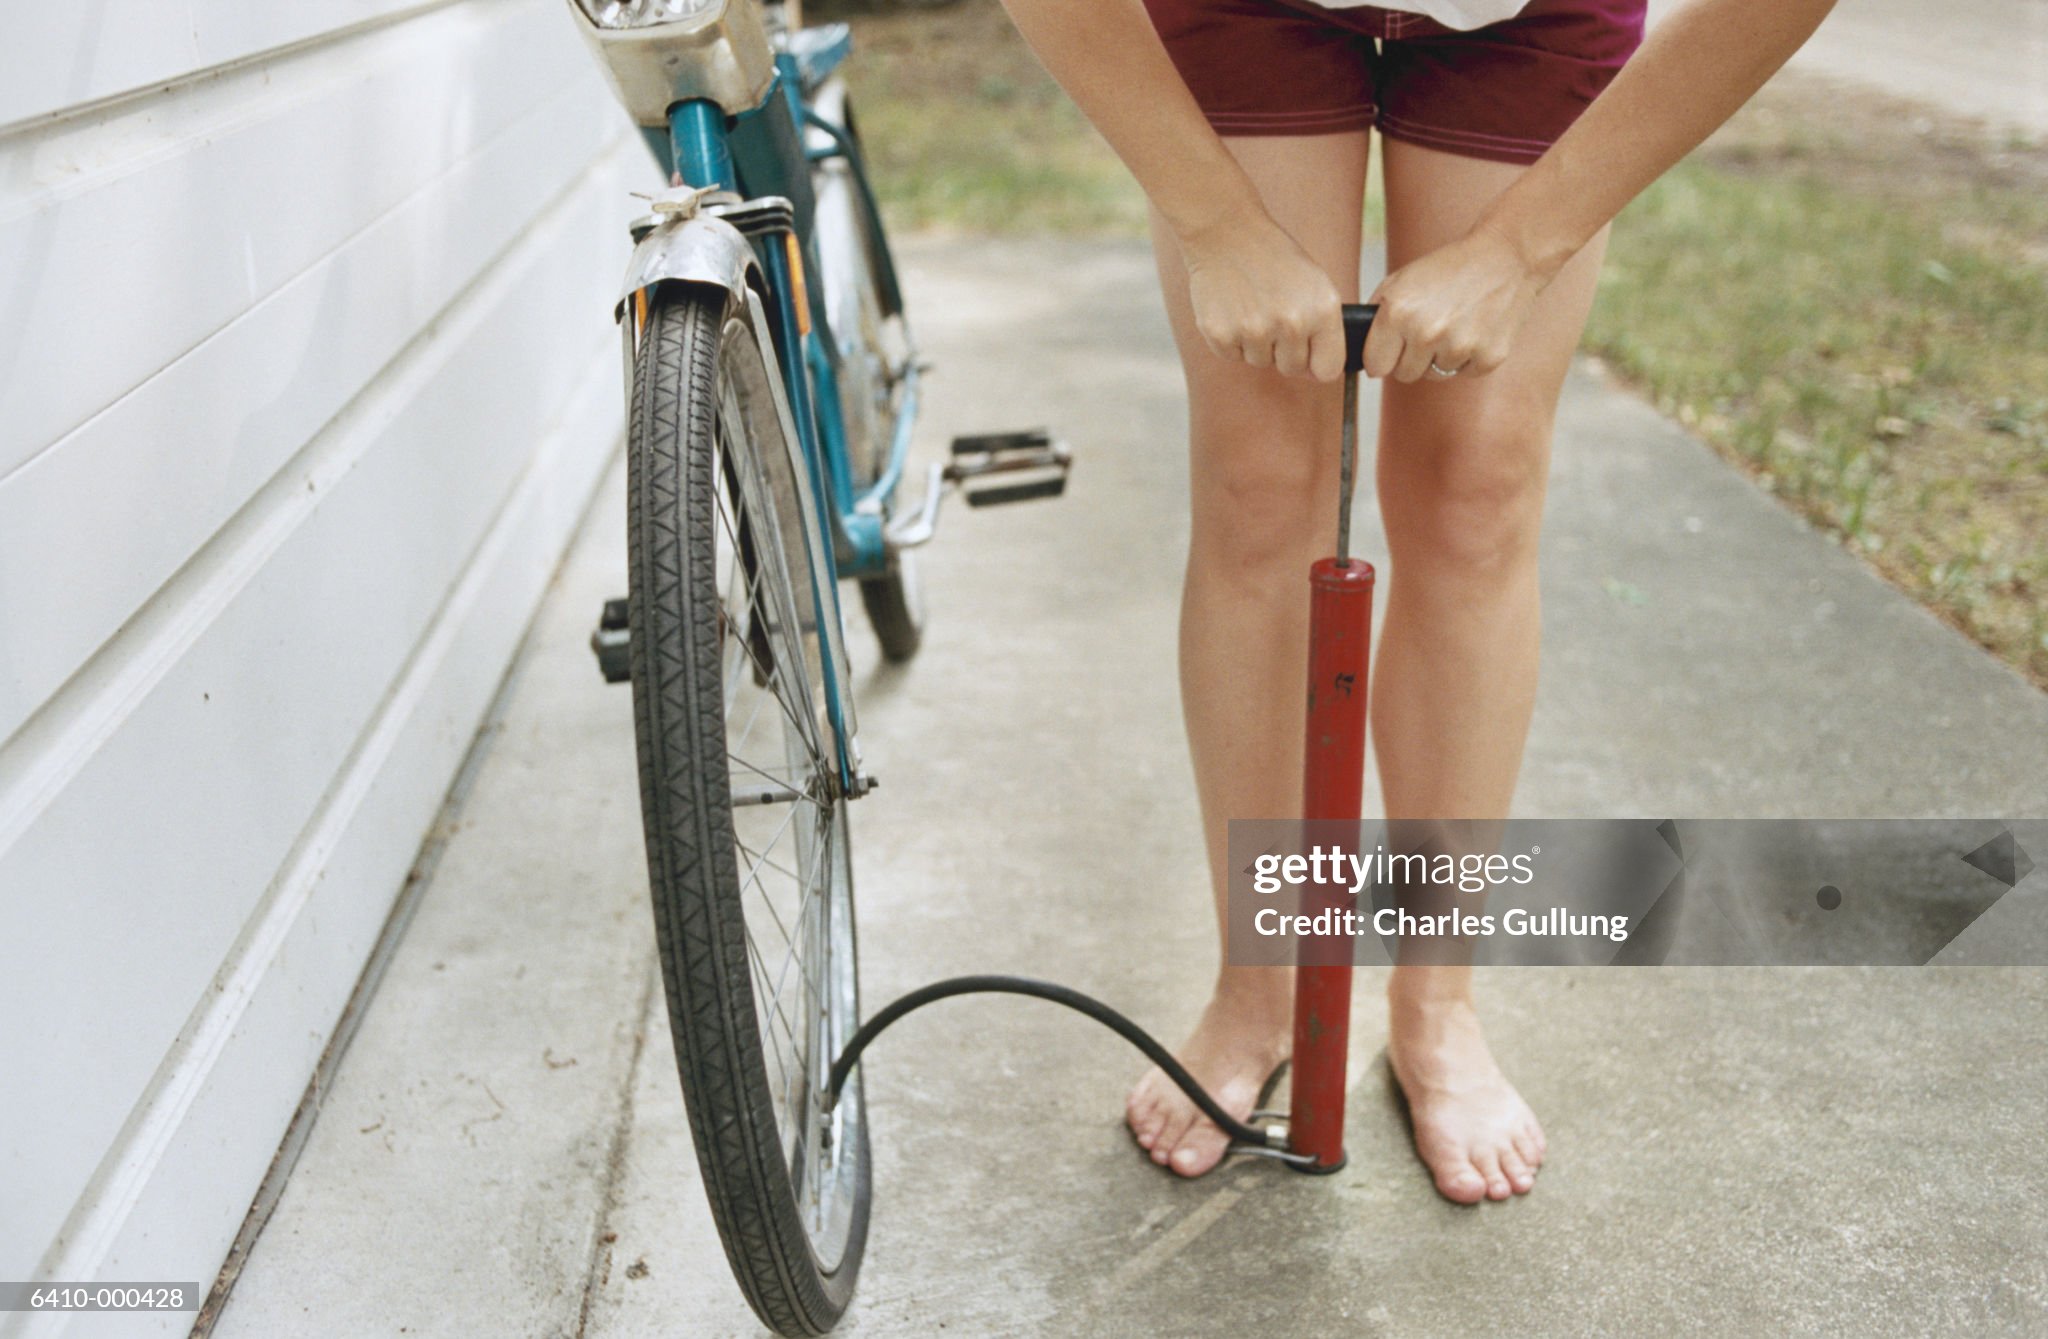 https://media.gettyimages.com/id/6410-000428/photo/woman-inflating-bicycle-tire.jpg?s=2048x2048&amp;w=gi&amp;k=20&amp;c=eAXX8-3eyHRjuIZlq9kEaWG25qlSpoYQ5Q0SWRoKPdE=